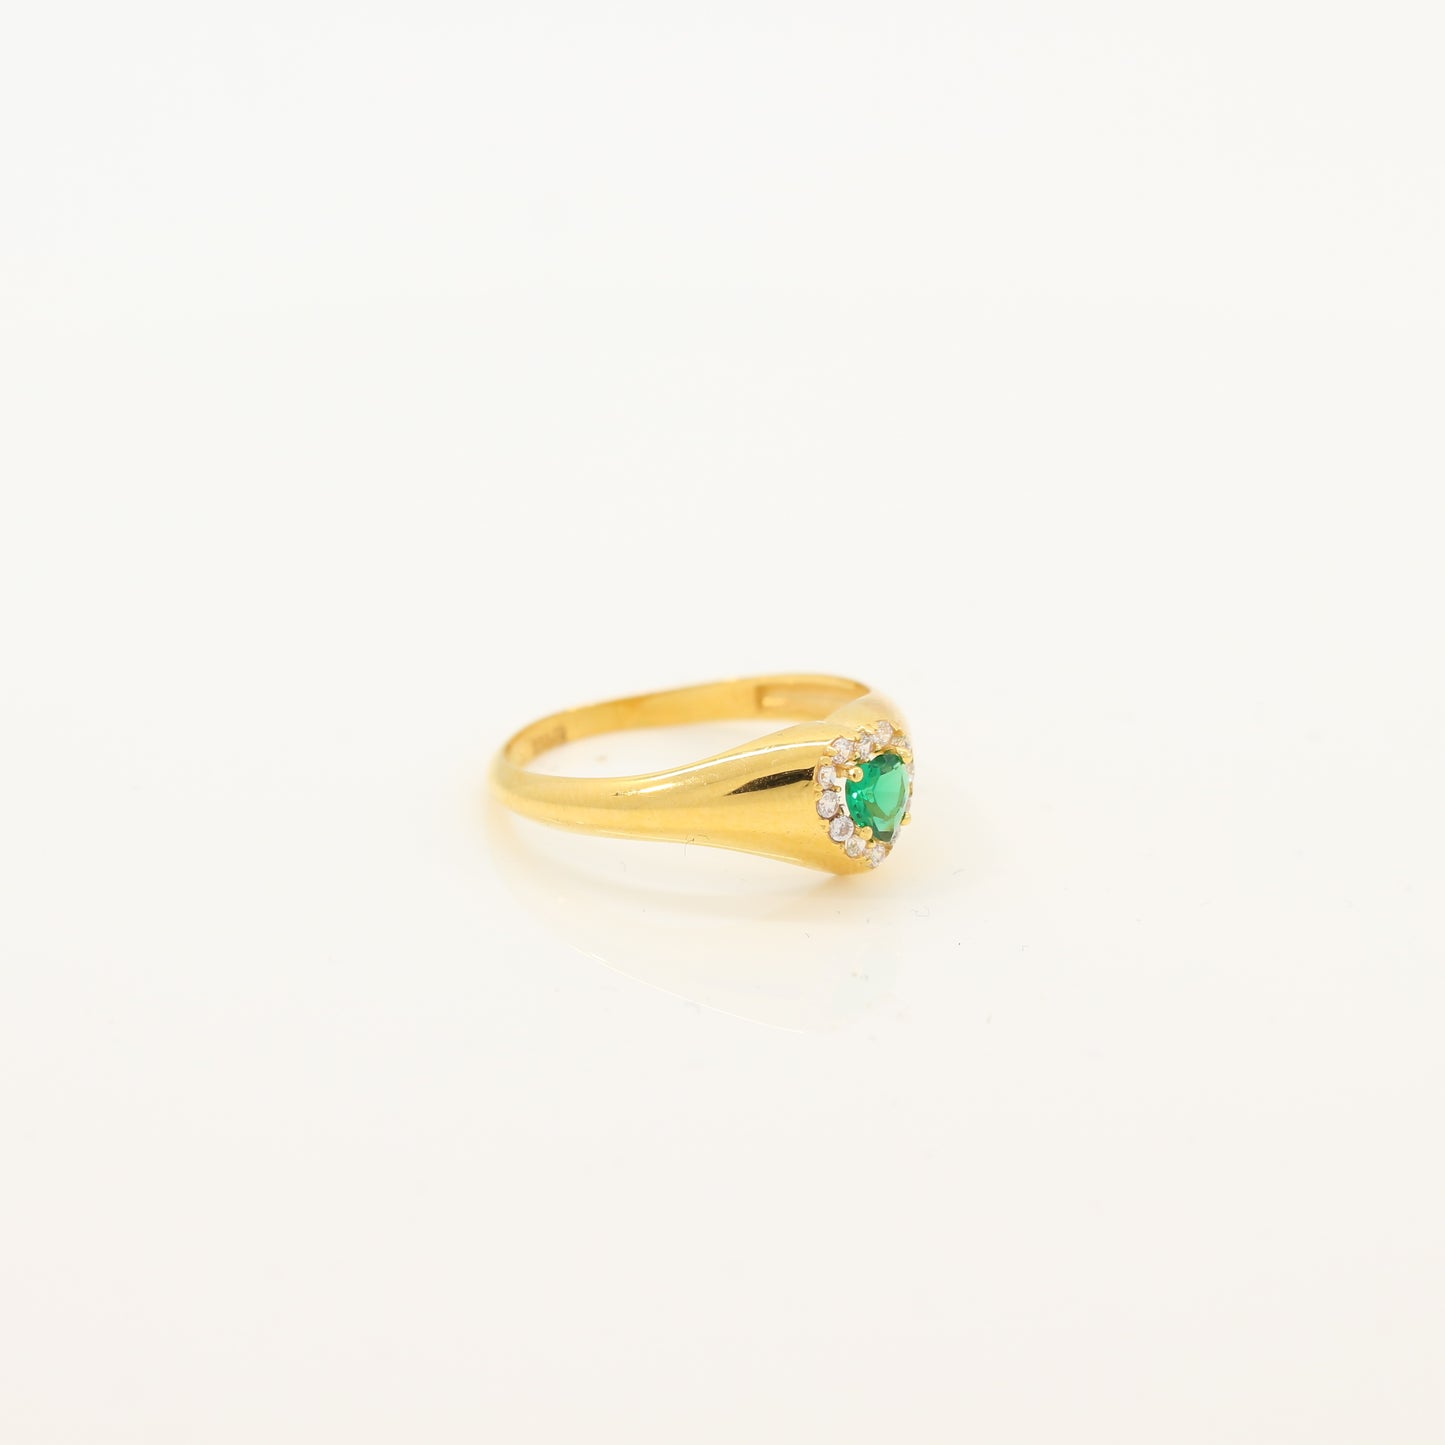 21K Gold Ring (size 8)